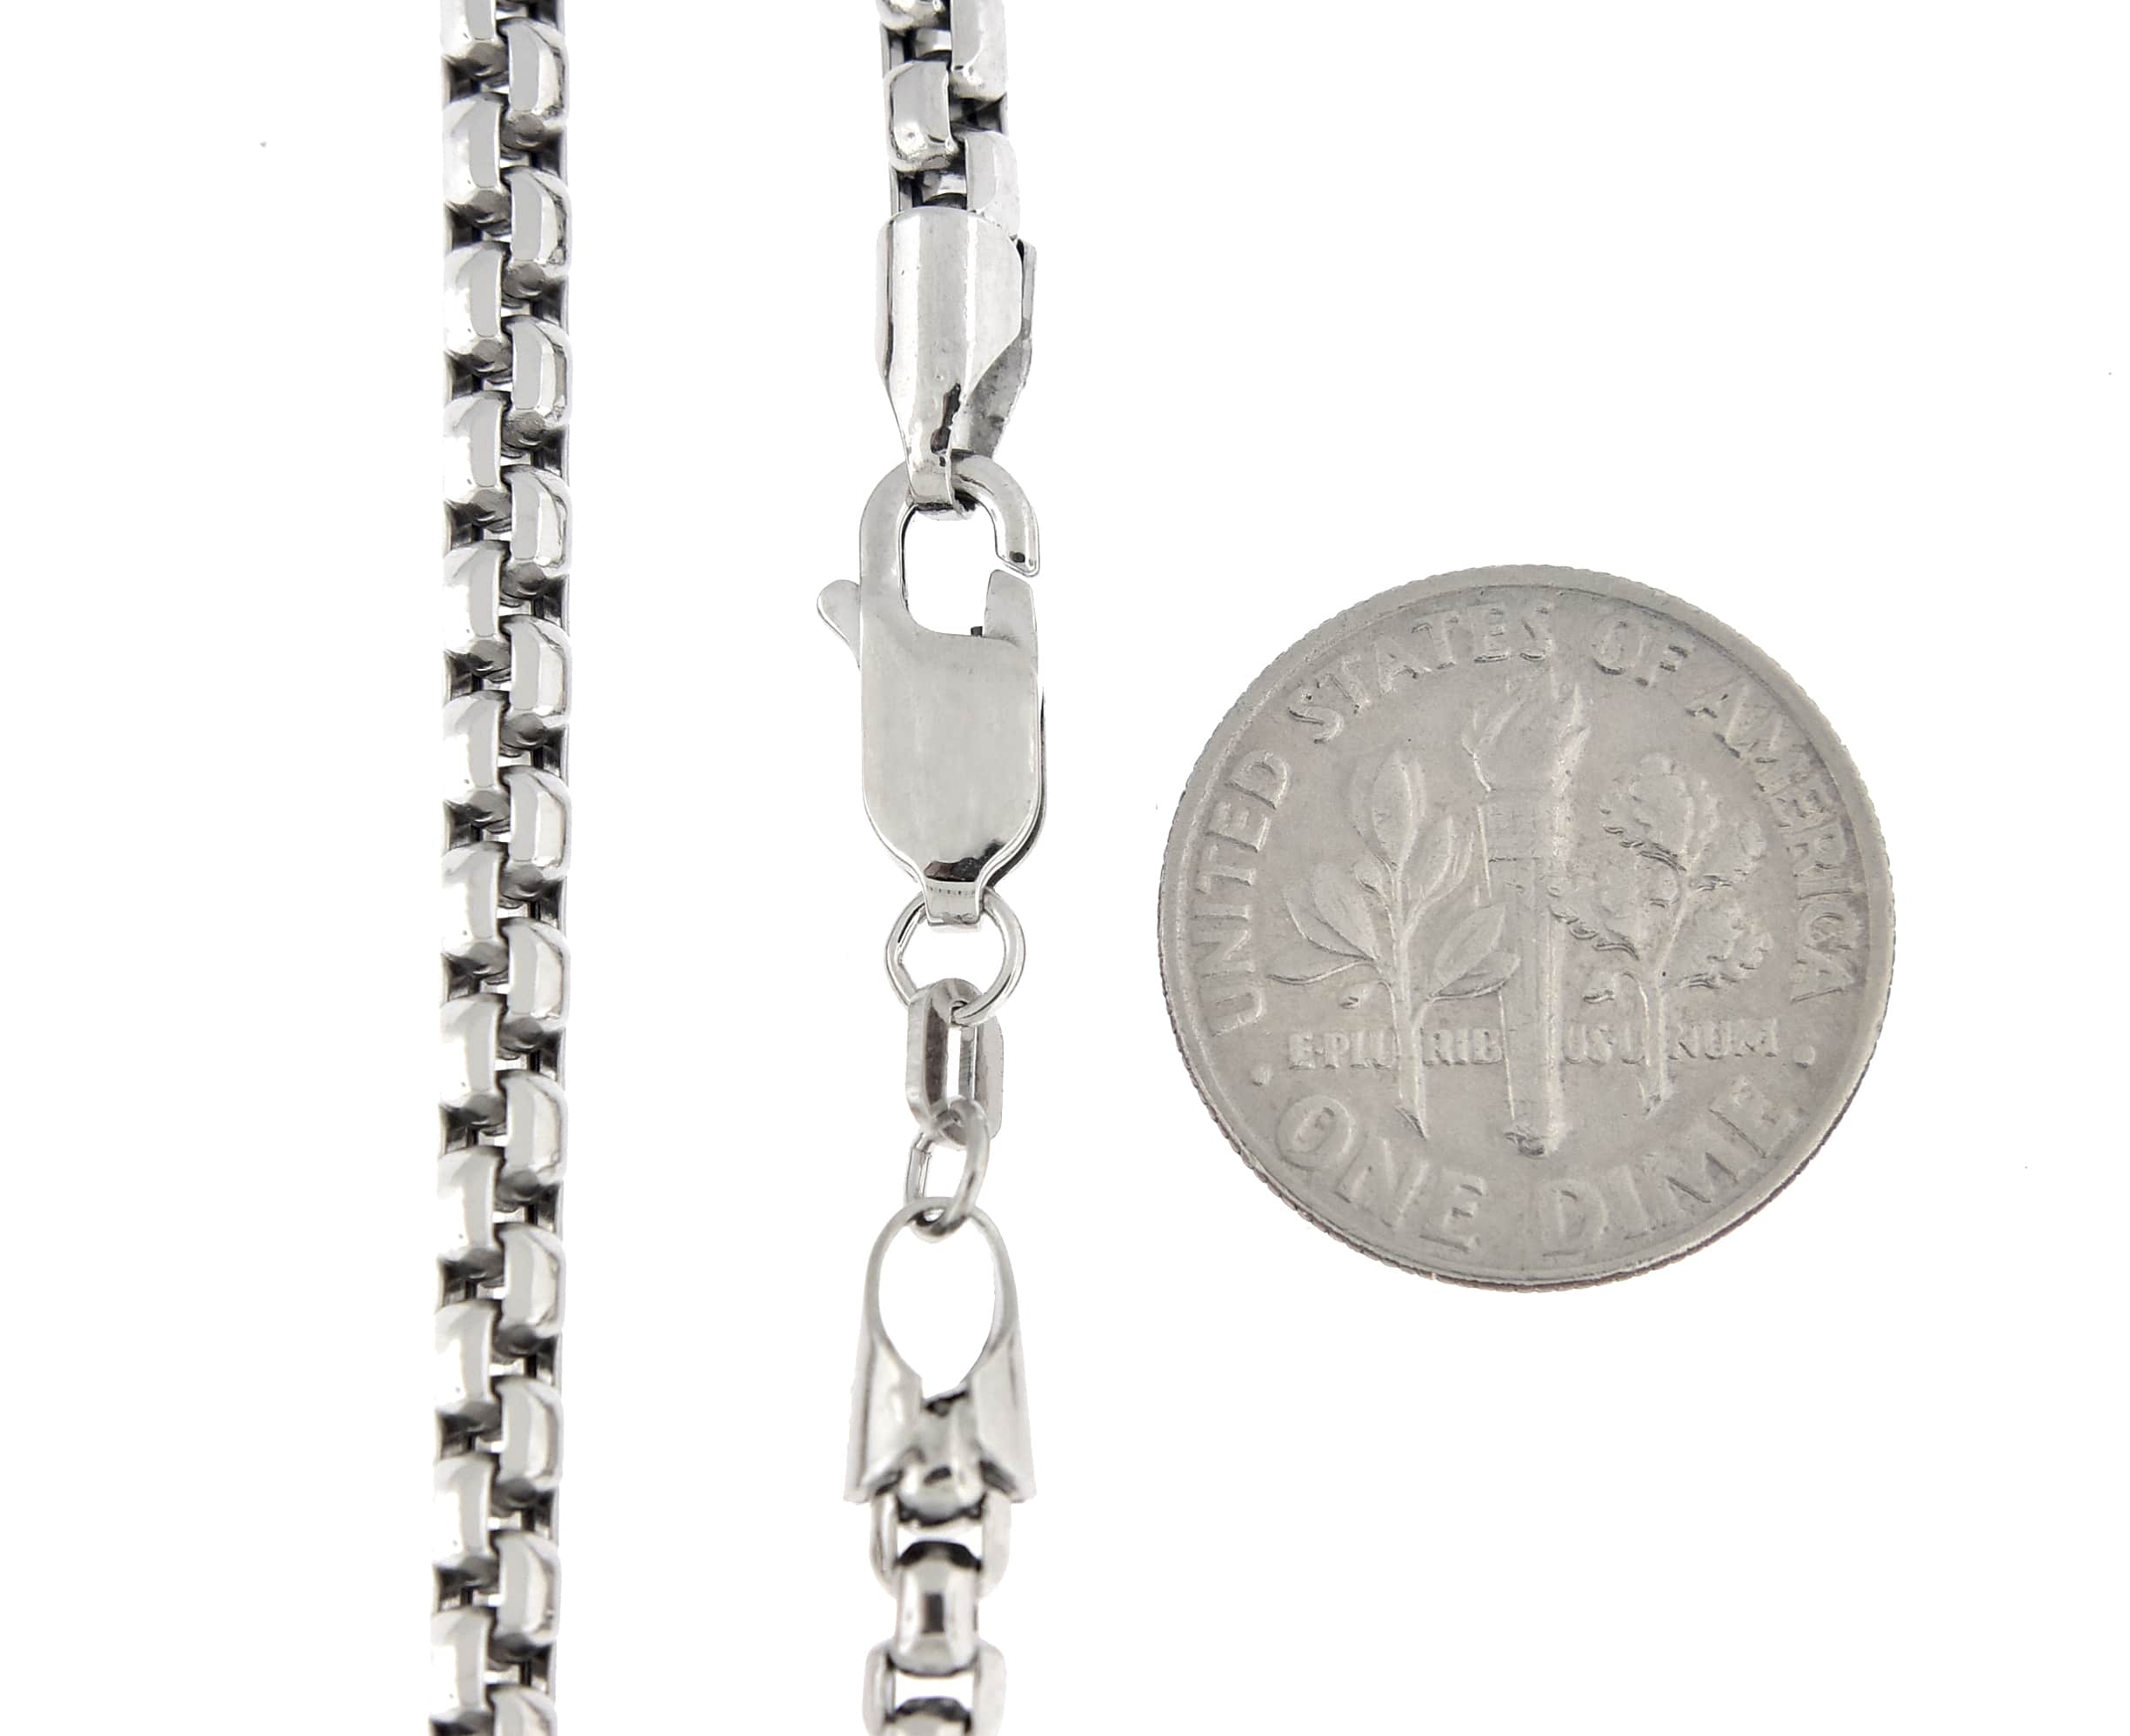 14K White Gold 3.6mm Round Box Bracelet Anklet Choker Necklace Pendant Chain Lobster Clasp